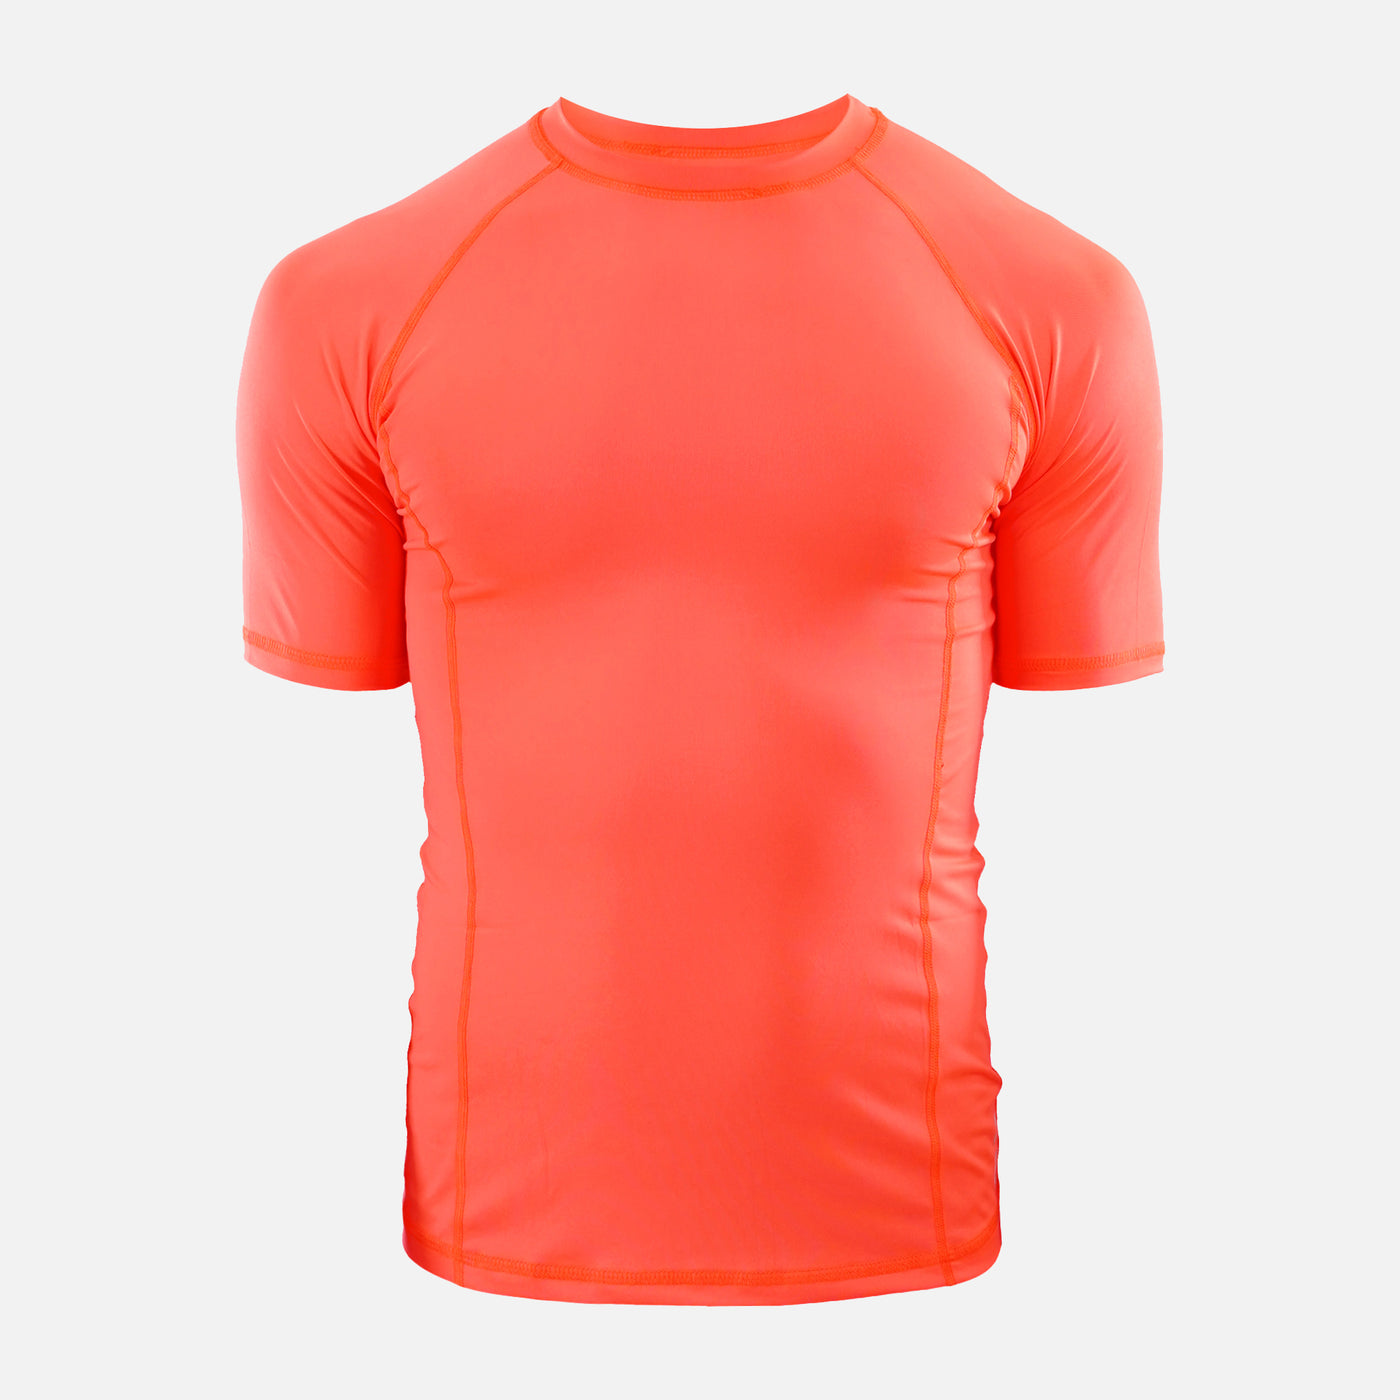 Neon Orange Compression Shirt